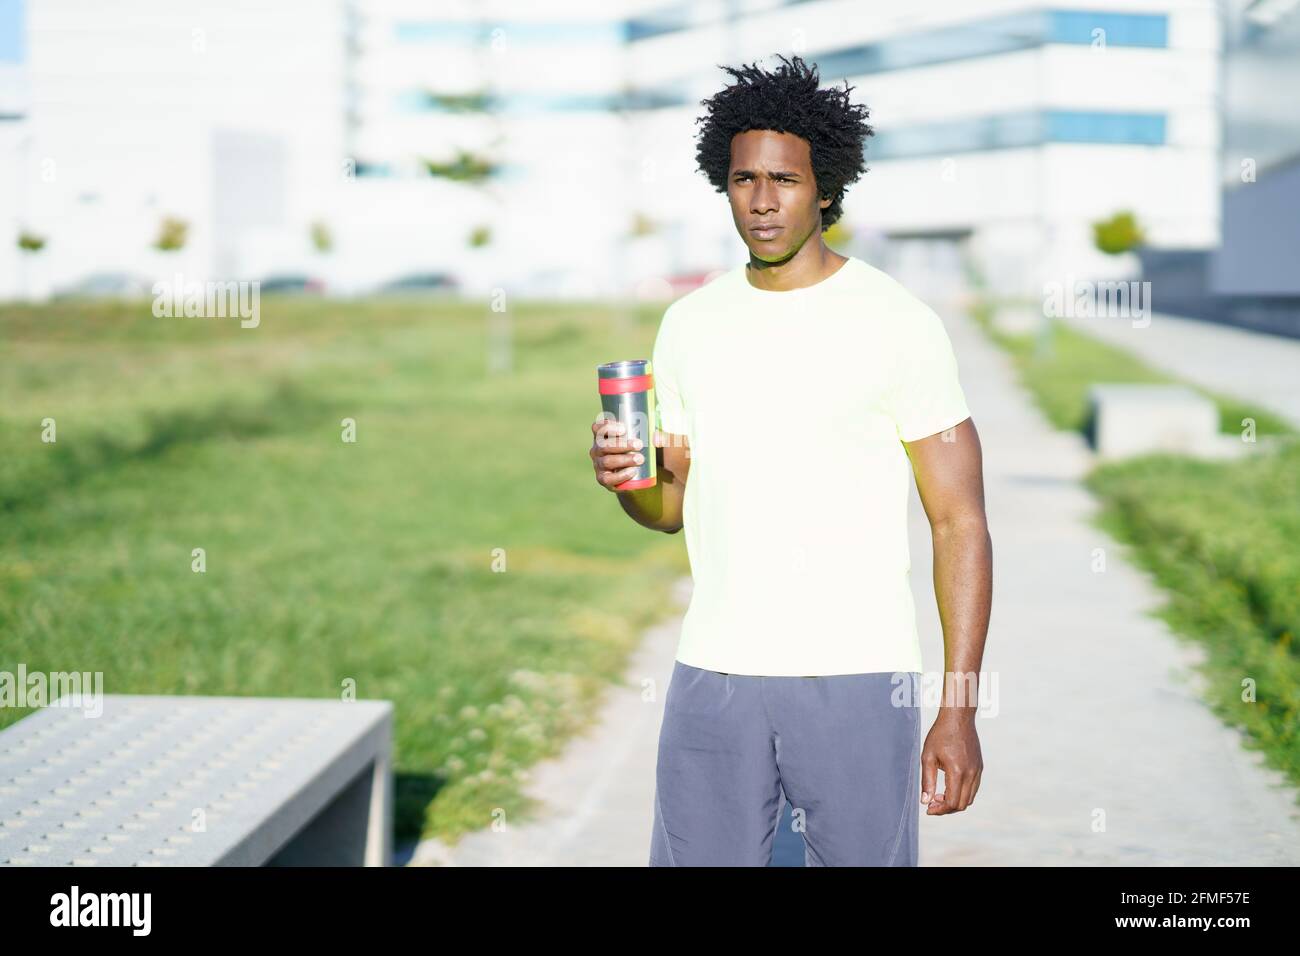 Black man drinking during exercise. Runner taking a hydration break. Stock Photo